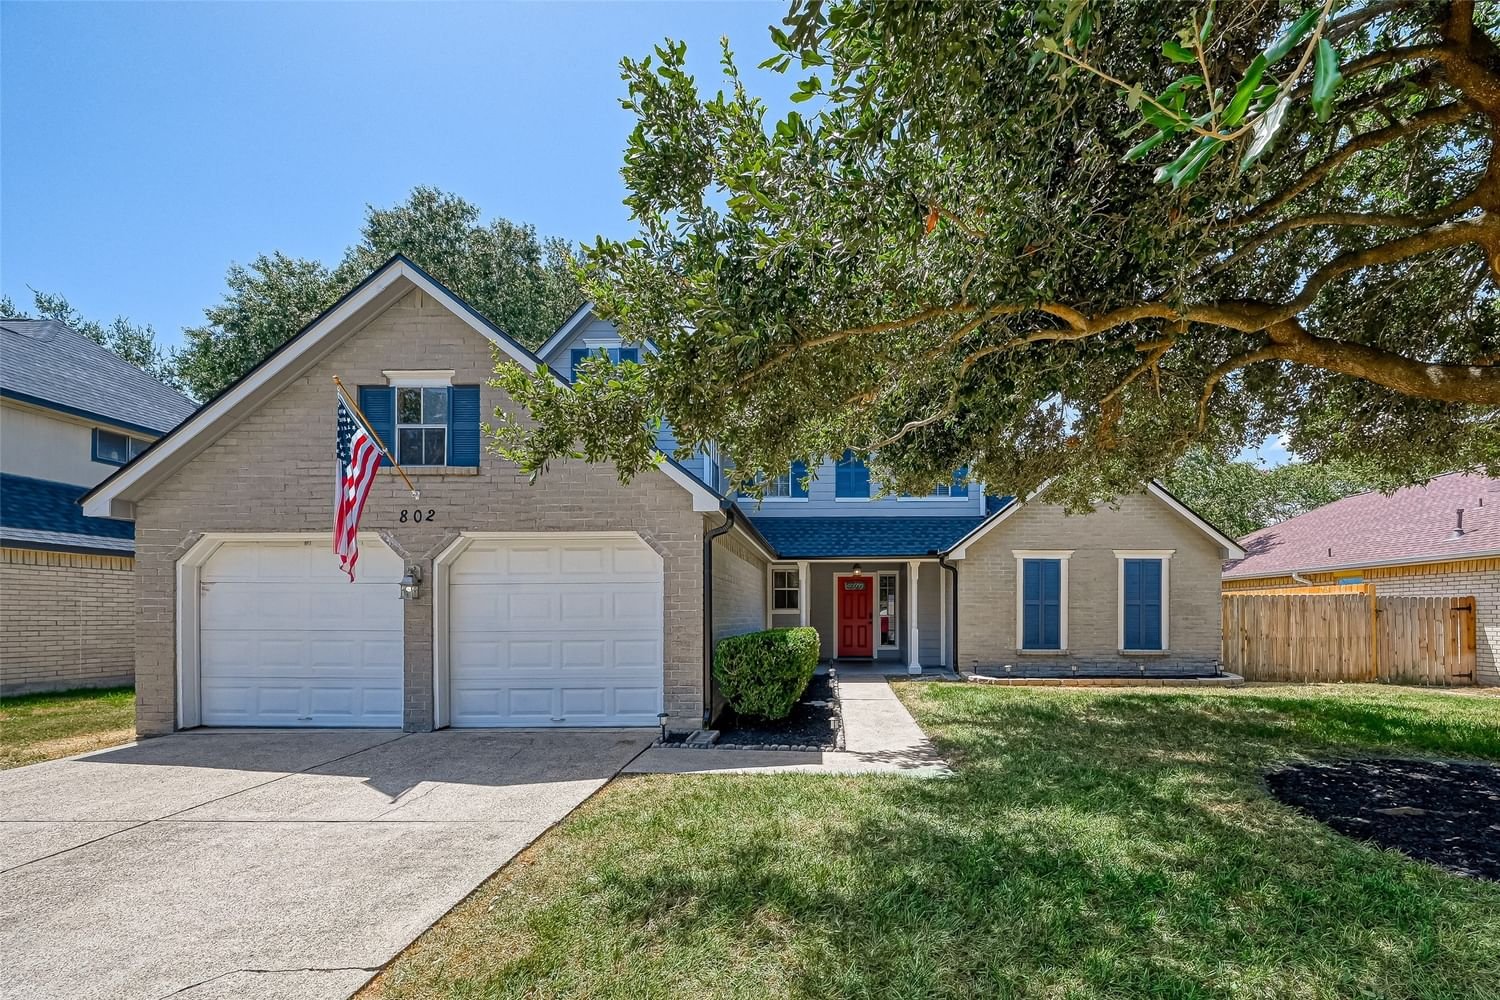 Real estate property located at 802 Bayou Bend, Harris, Bayou Bend, Deer Park, TX, US